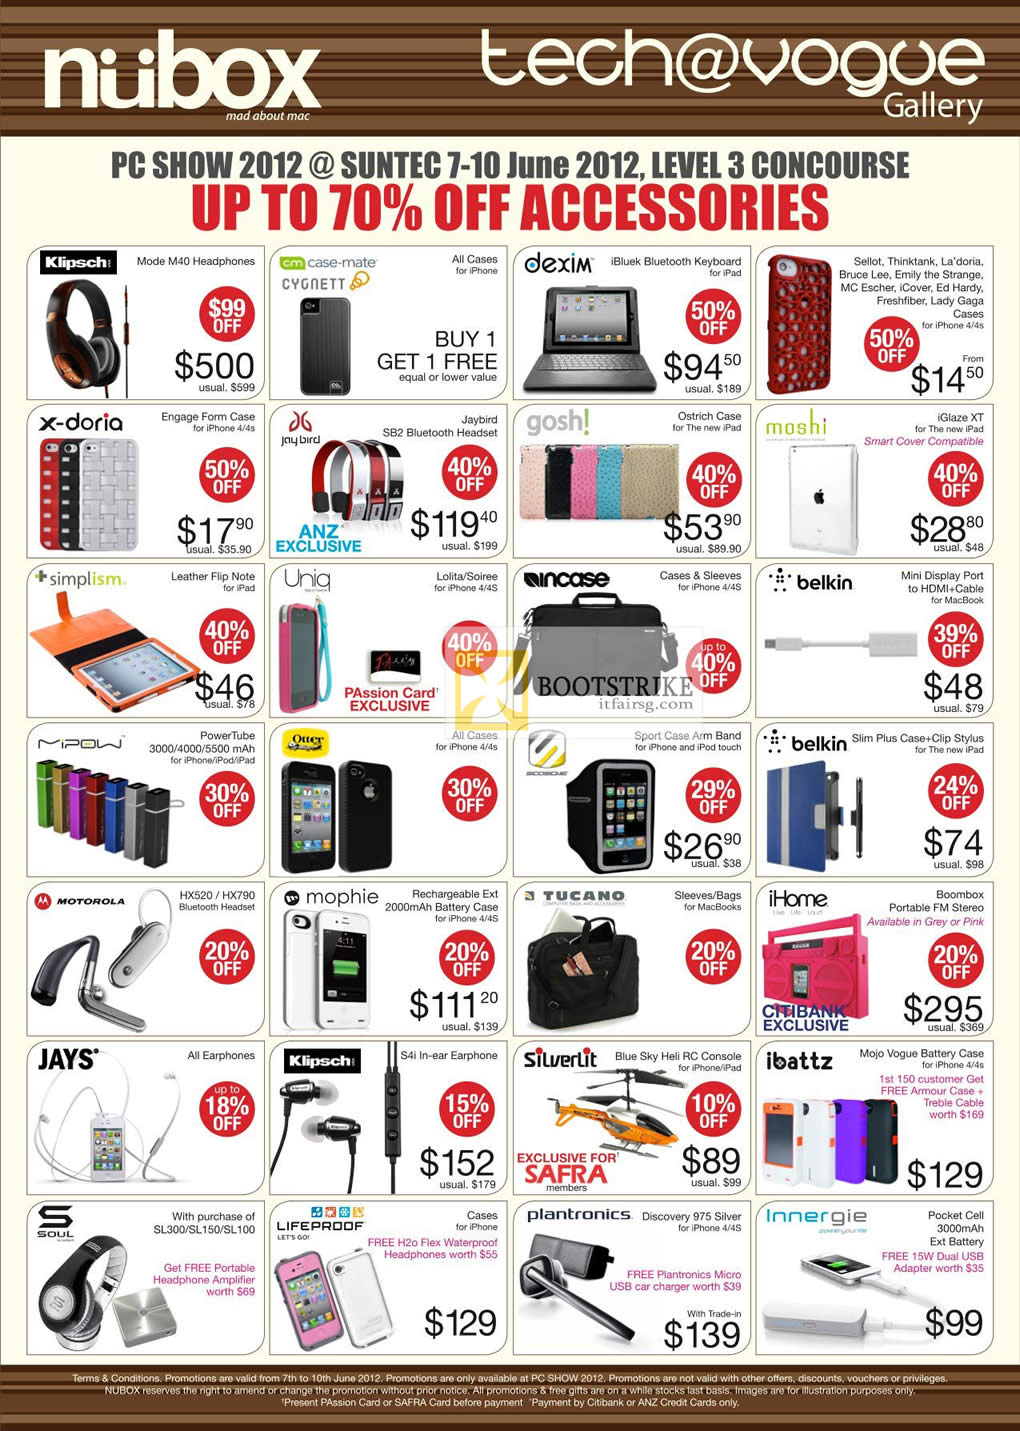 PC SHOW 2012 price list image brochure of Nubox Accessories Klipsch Mode M40 Headphone, X-doria Engage, IGlaze XT, Uniq, Lifeproof Case, Innergie, Ibattz, IHome